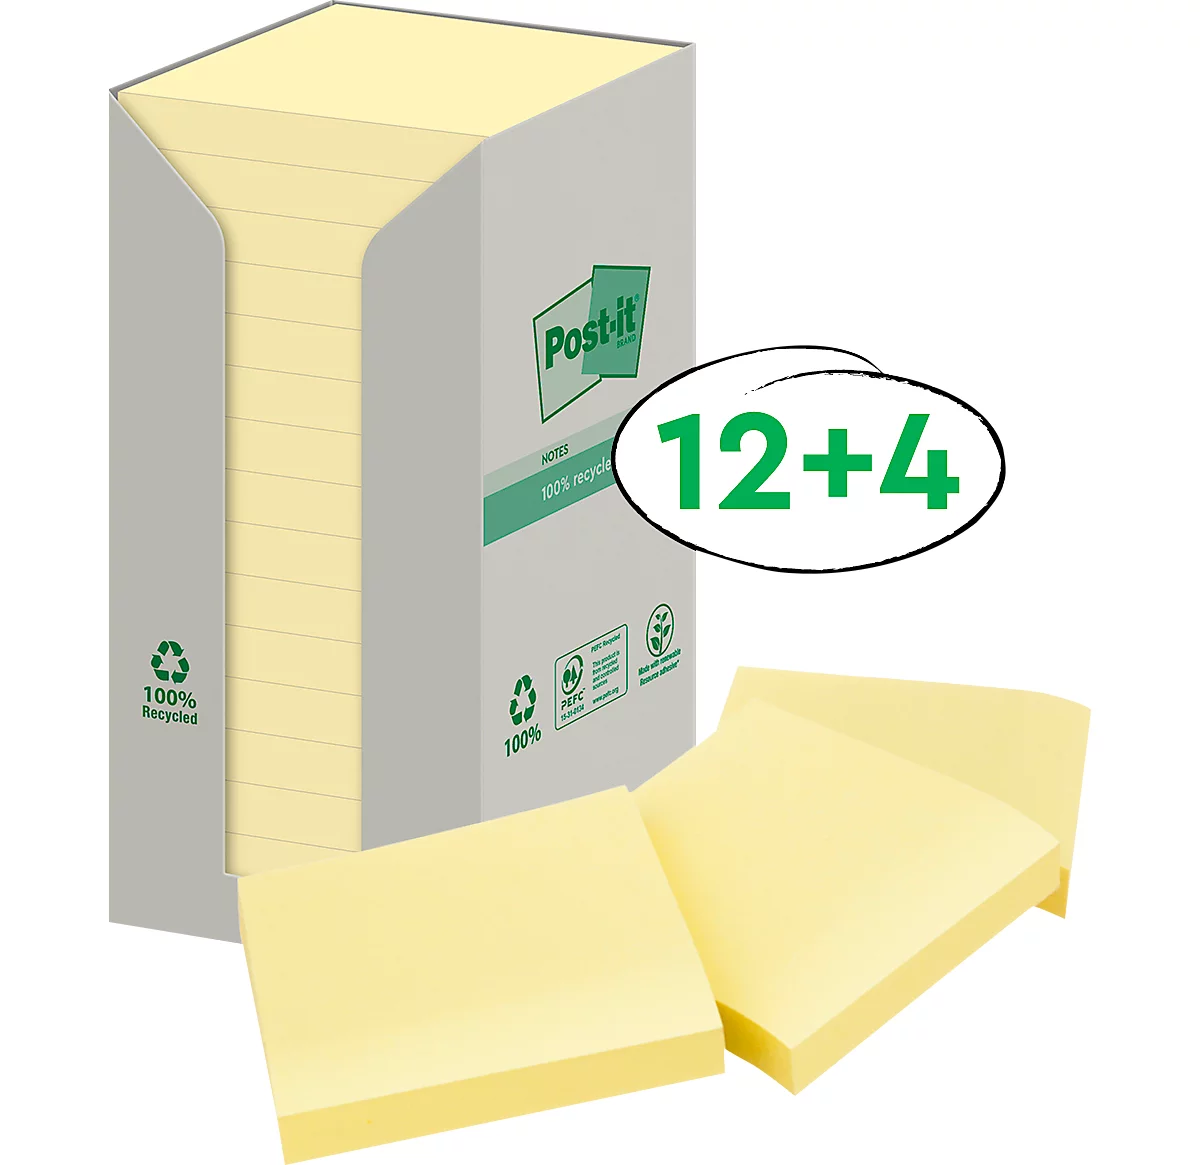 Post-it® Recycling Notes 654-1T, B 76 x H 76 mm, 100 % Recycling-Papier, gelb, 16 Blöcke á 100 Blatt